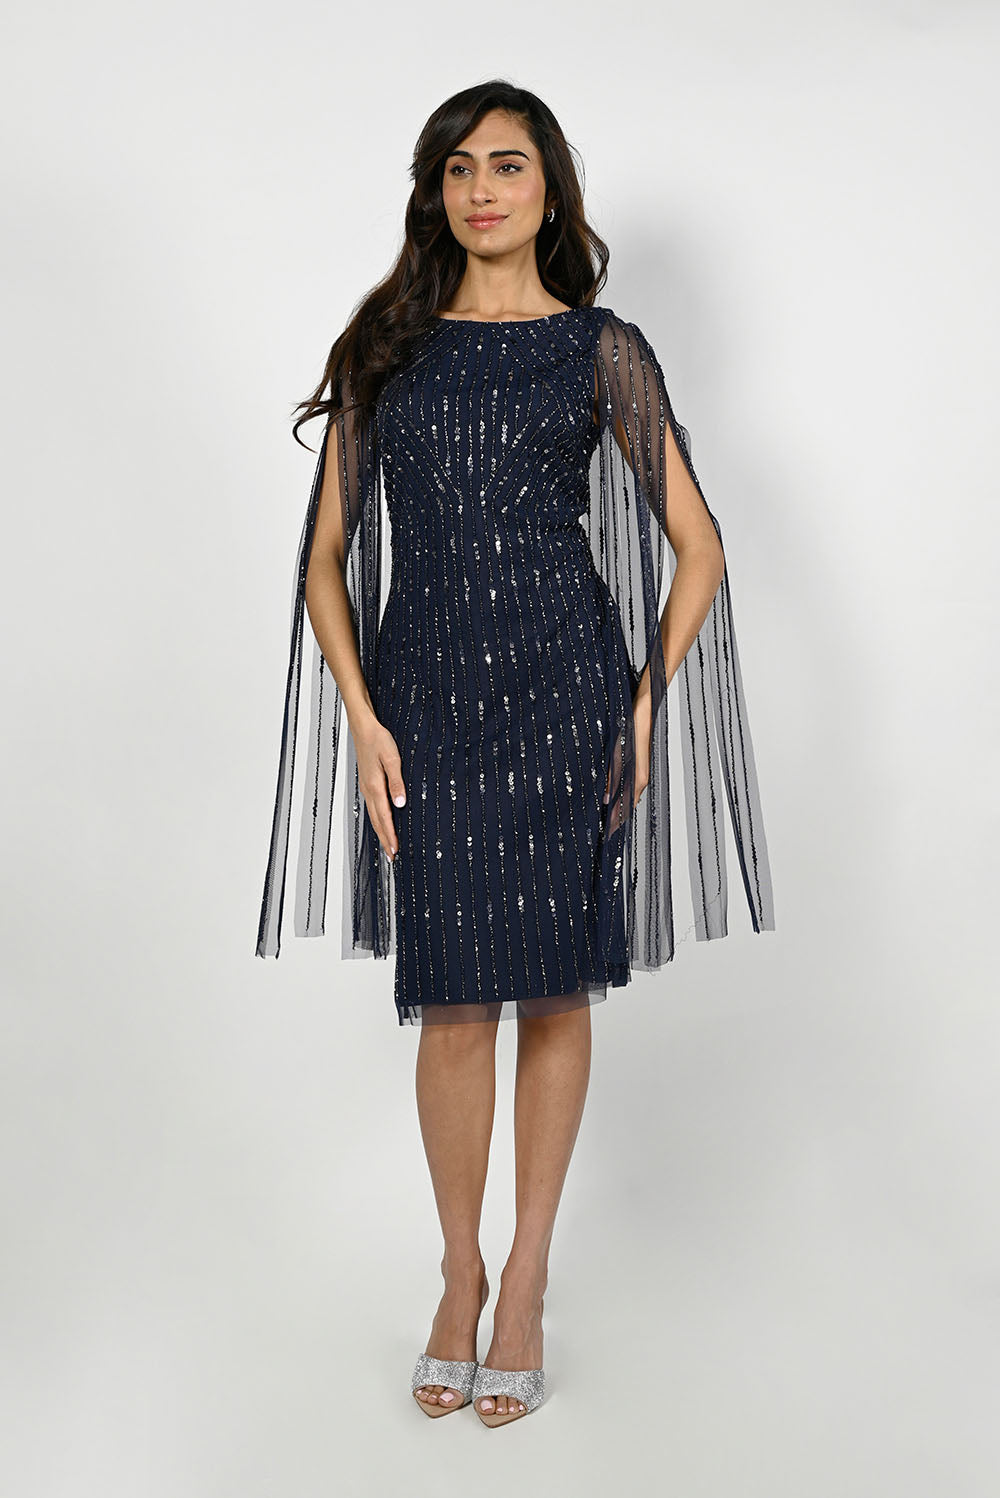 Frank Lyman Midnight Blue Dress Style 229401I